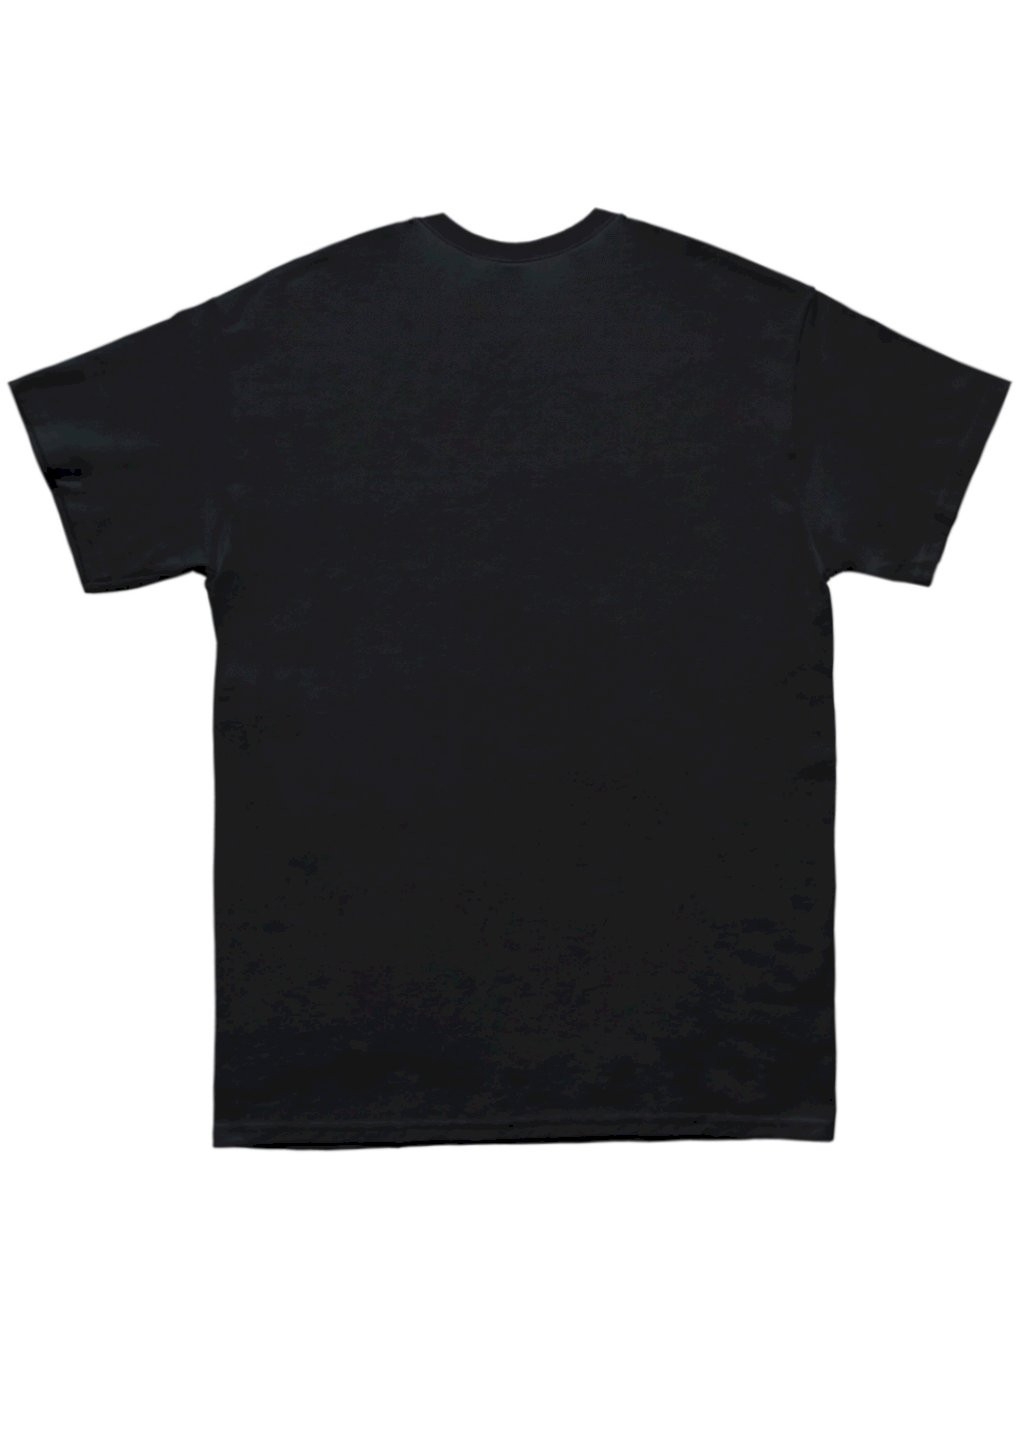 Чорна футболка чоловіча чорна "space suit patent" Trace of Space